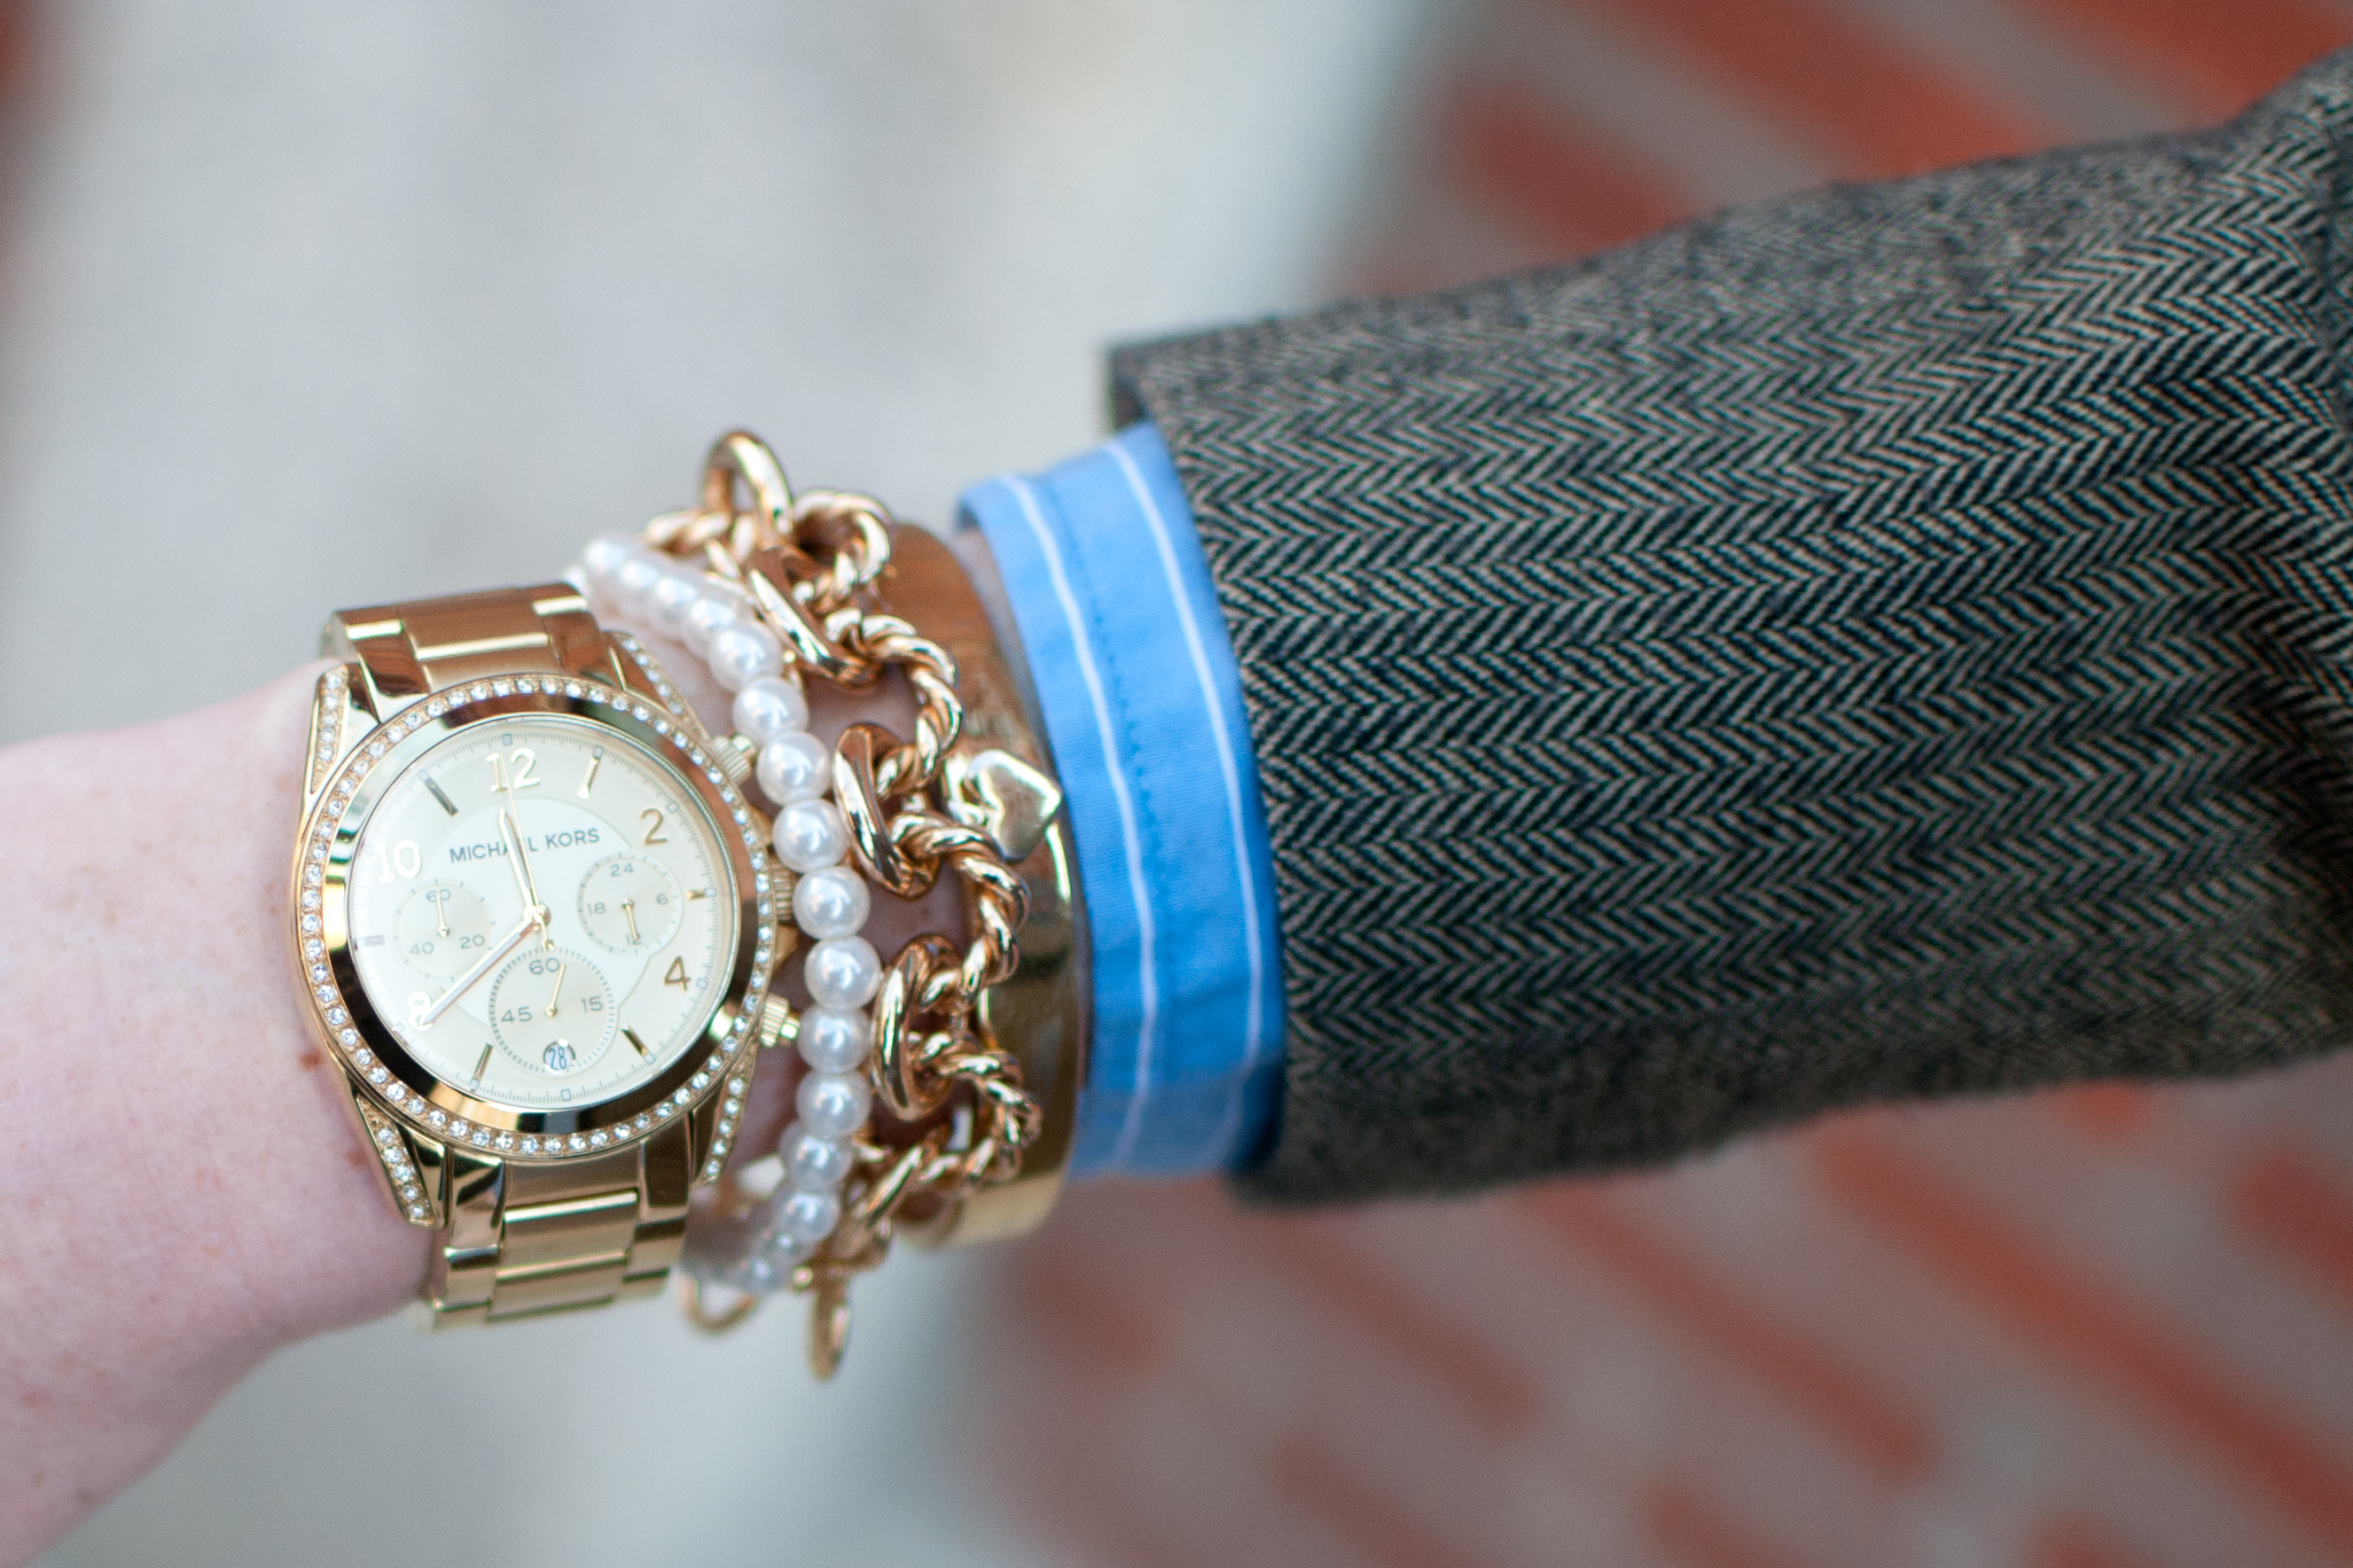 Michael Kors watch, J.Crew bracelet, Kate Spade bracelet